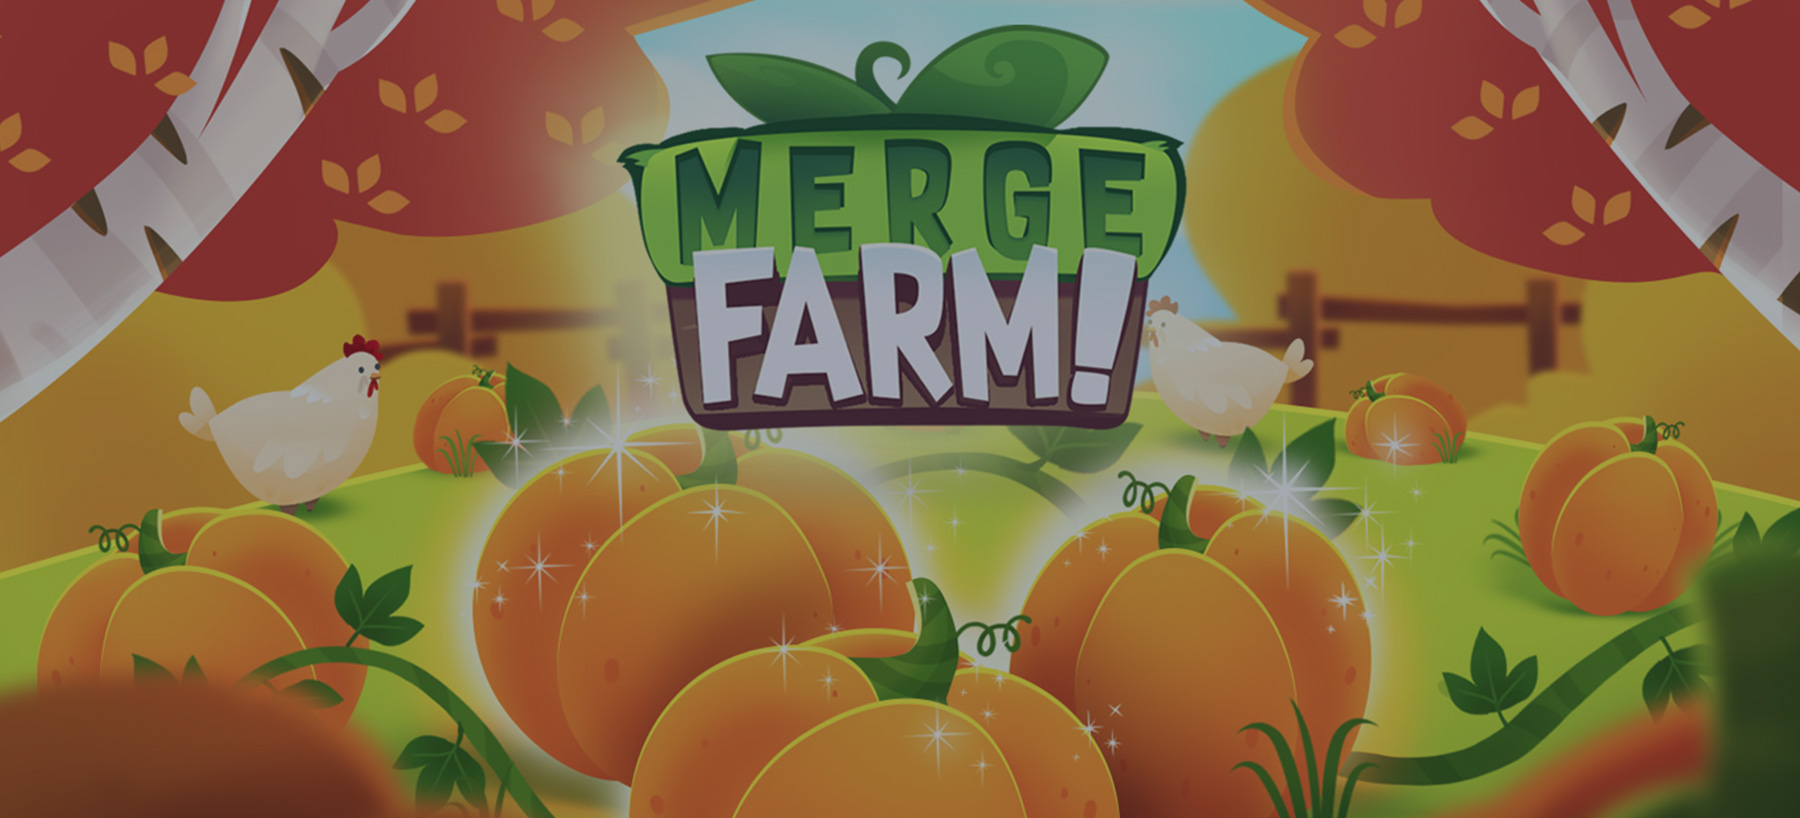 Merge Farm! Hero Image